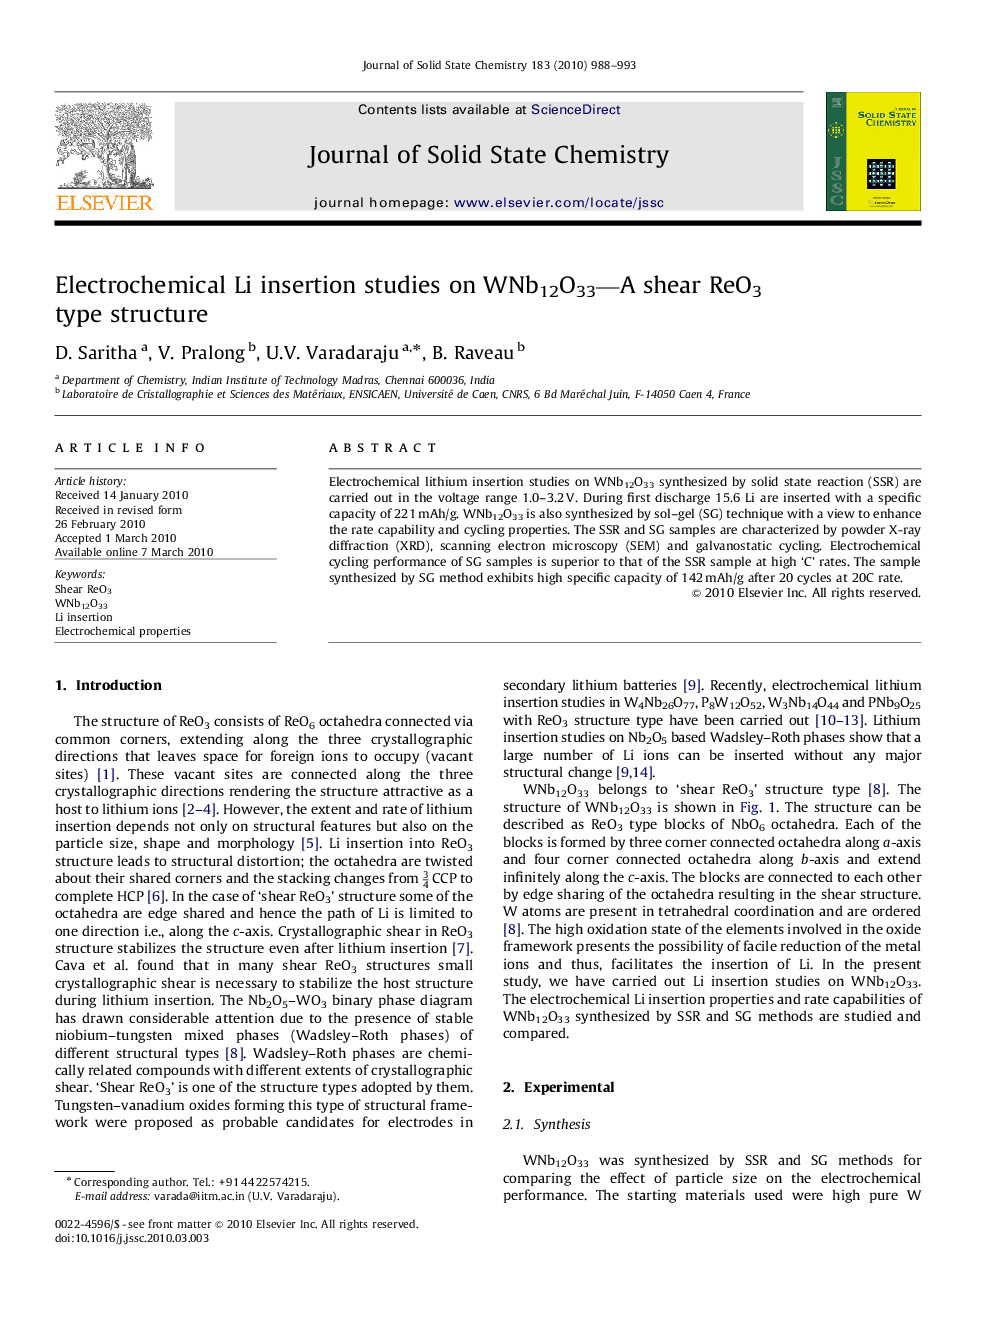 Electrochemical Li insertion studies on WNb12O33—A shear ReO3 type structure